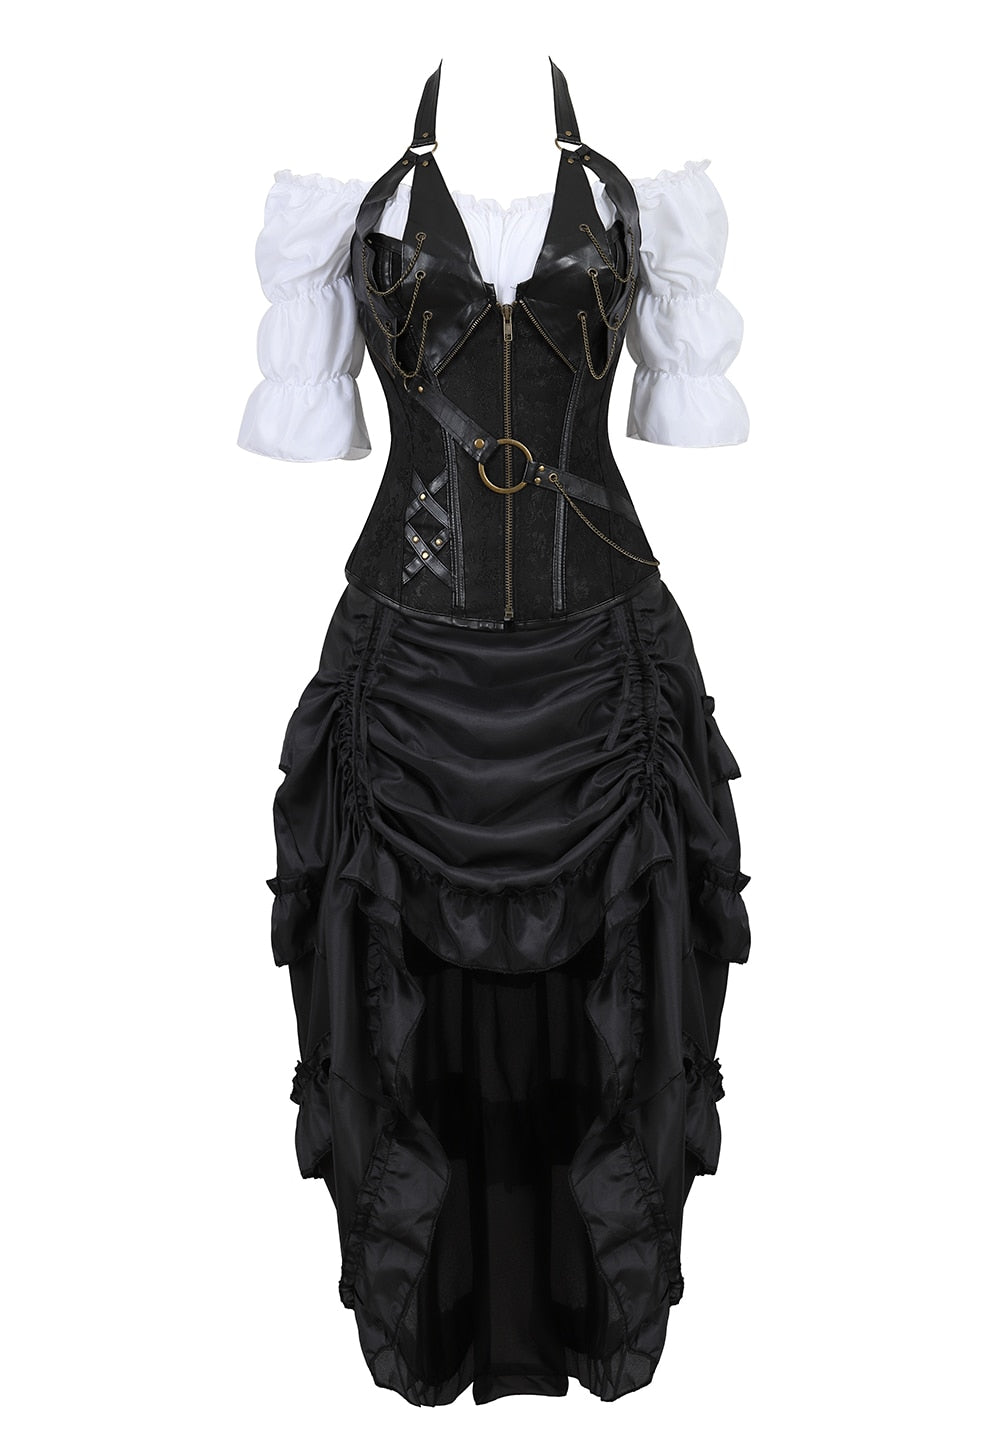 Steampunk Corset Dress Vintage skirt Goddess Costume High Low Ruffle Party Pirate Skirts Lolita Medieval Victorian 3-piece Set